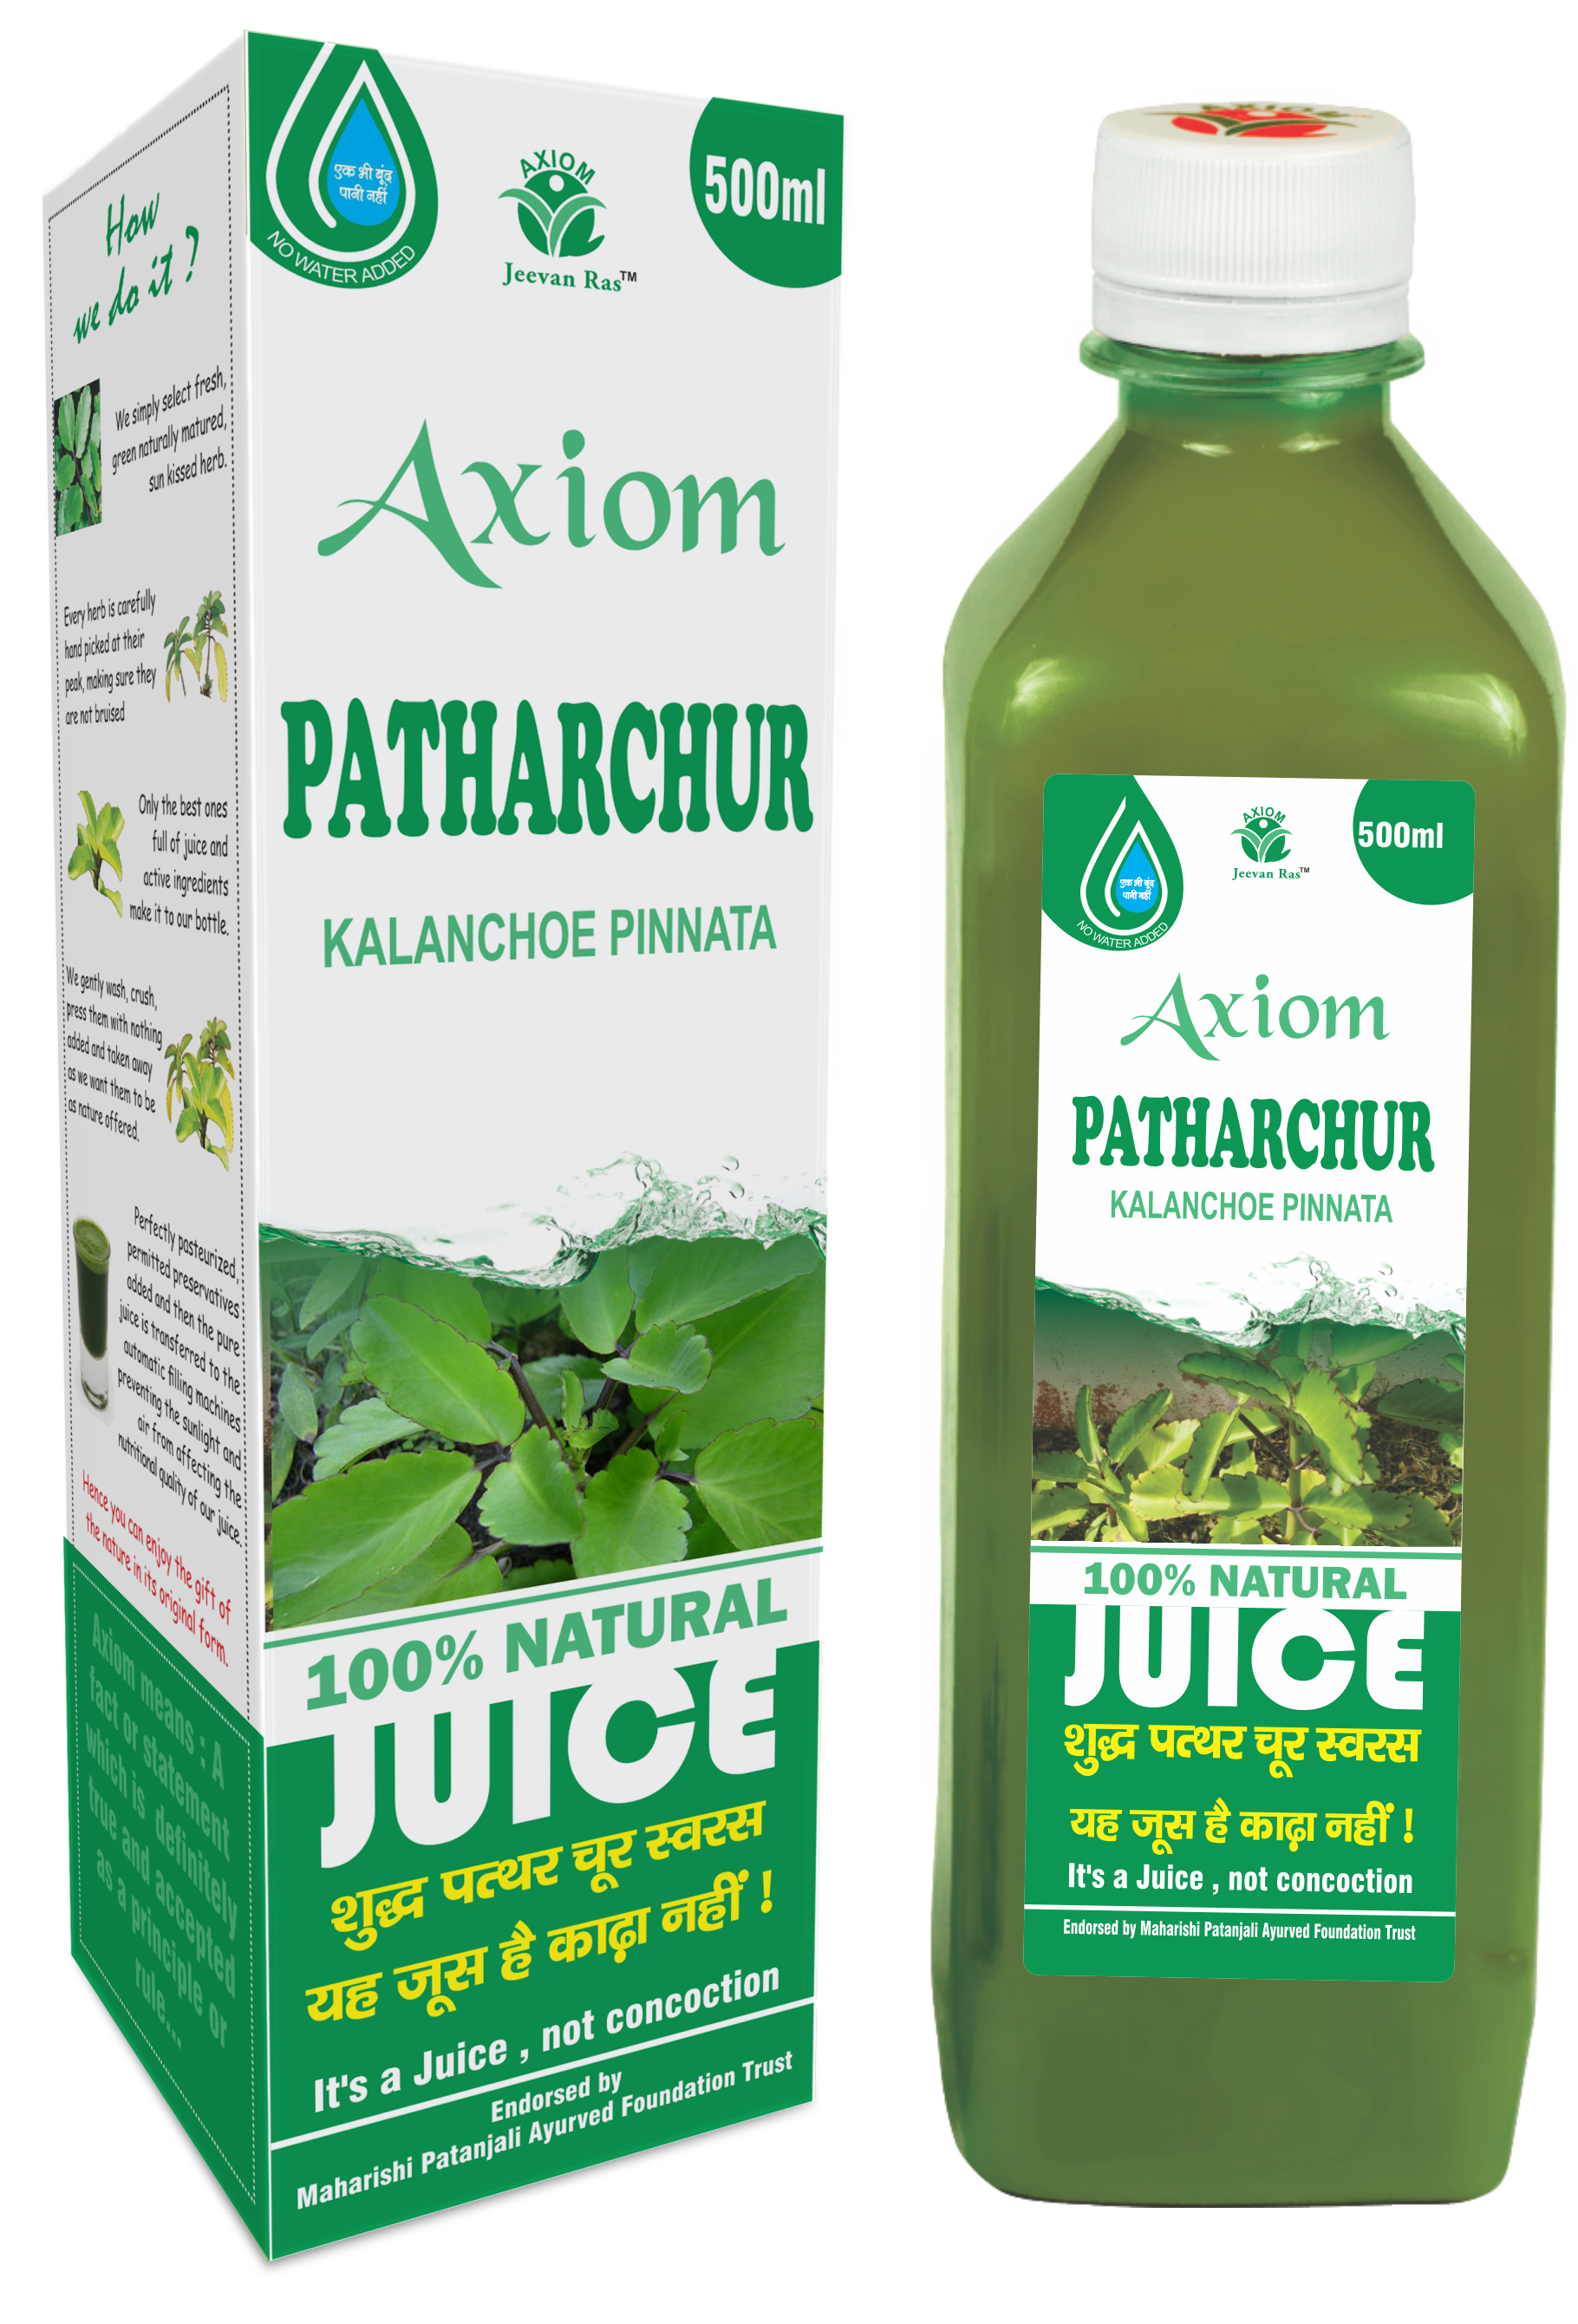 Buy Axiom Patharchur Juice at Best Price Online